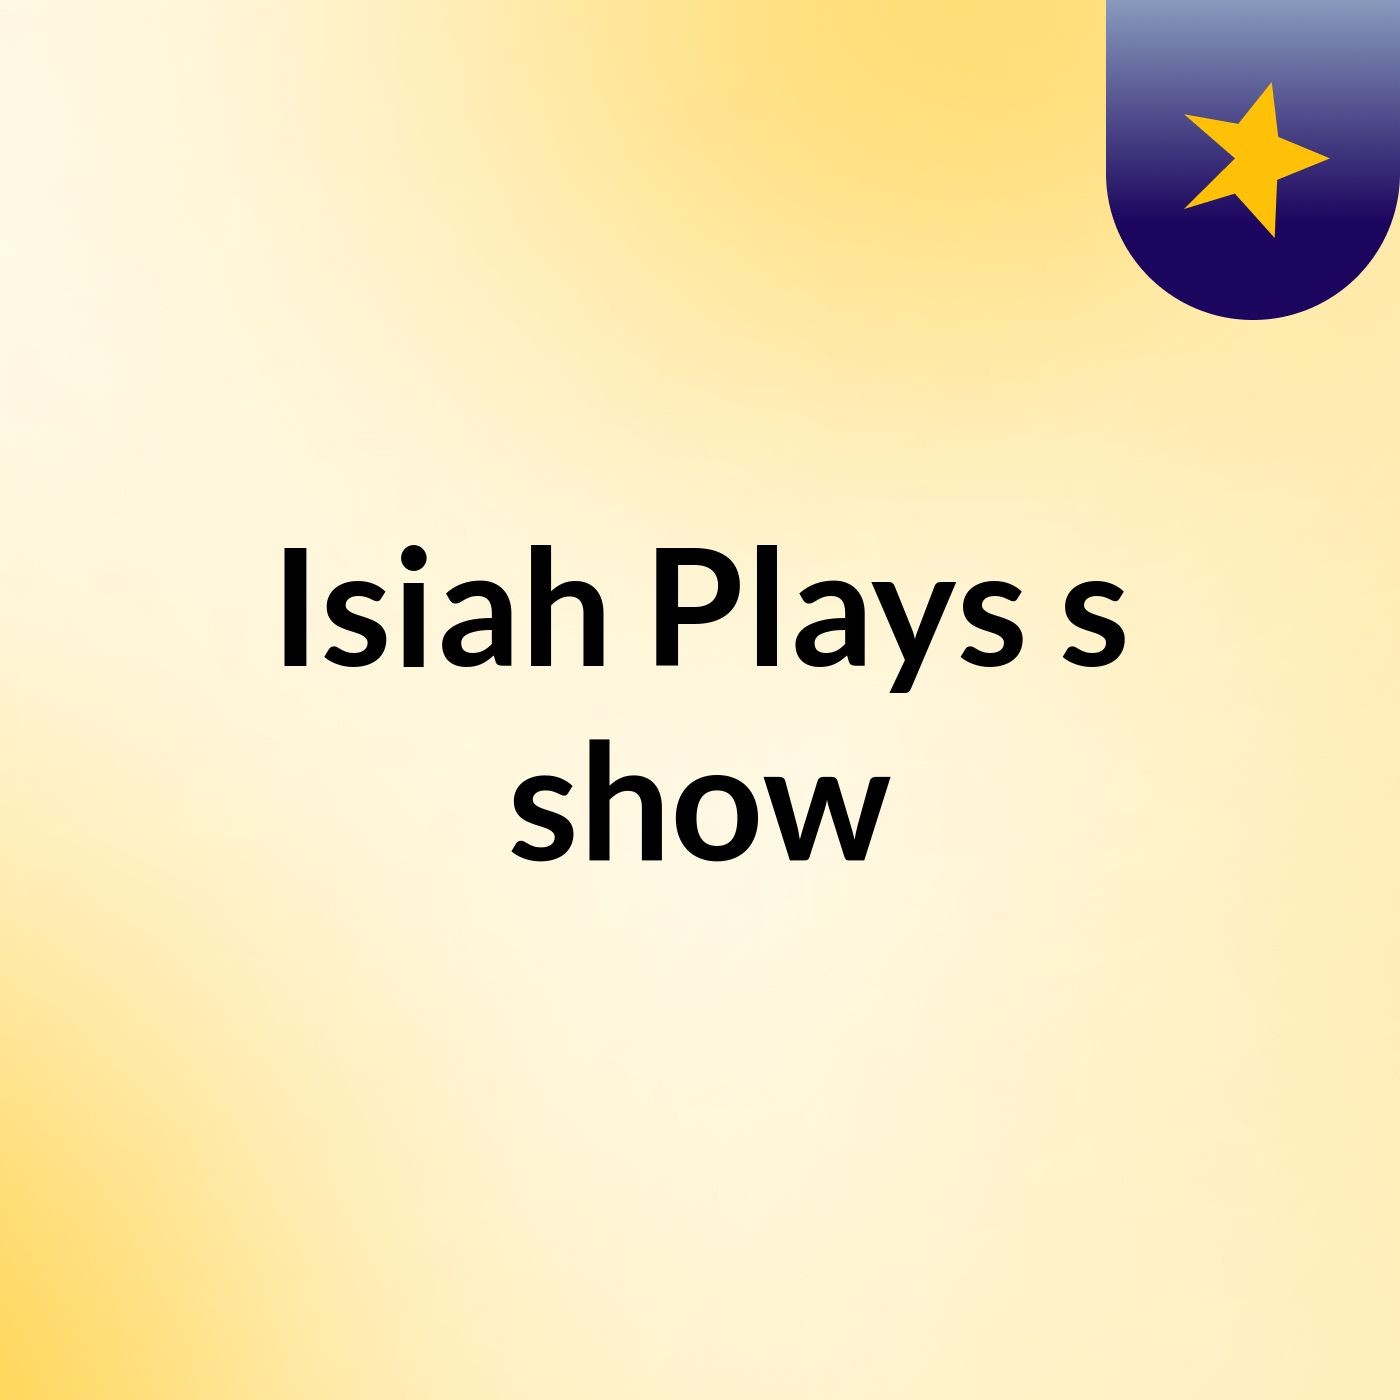 Isiah Plays's show